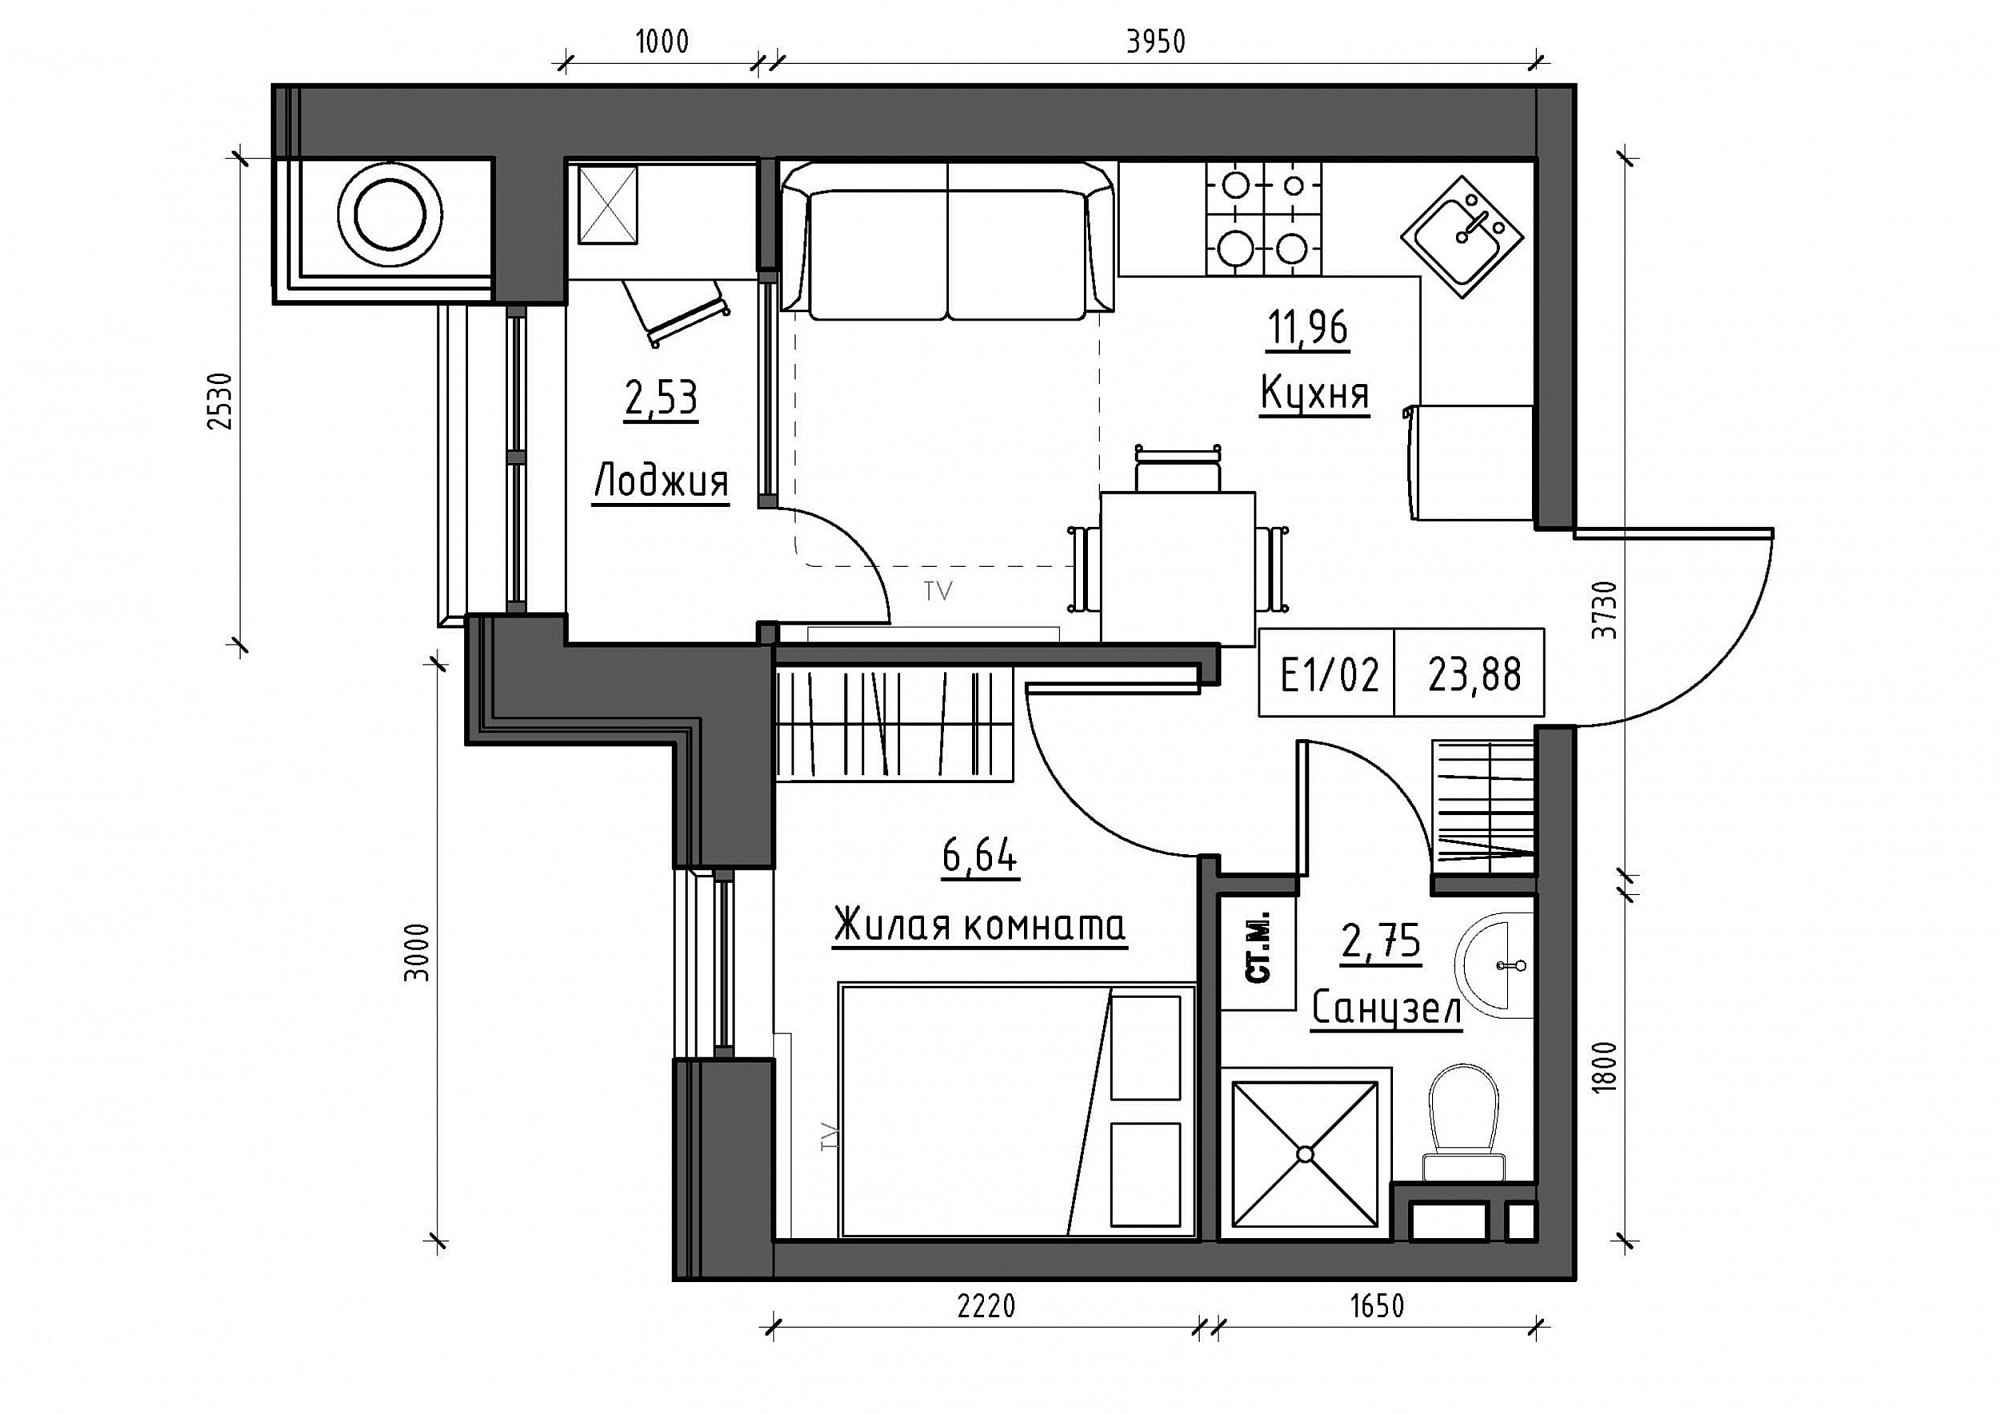 Planning 1-rm flats area 23.88m2, KS-011-05/0001.